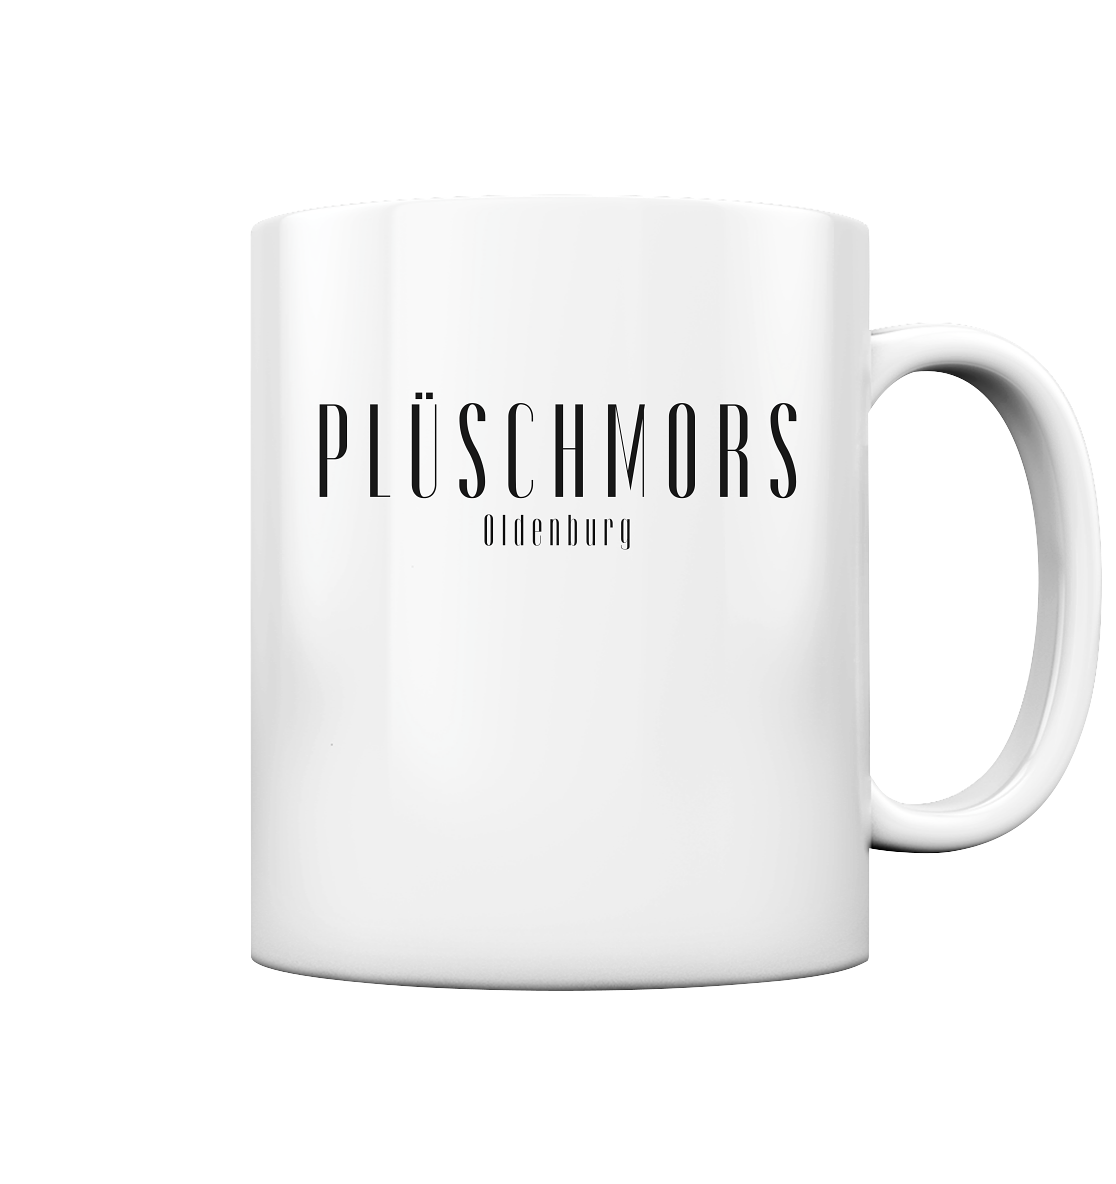 Plüschmors - Tasse glossy